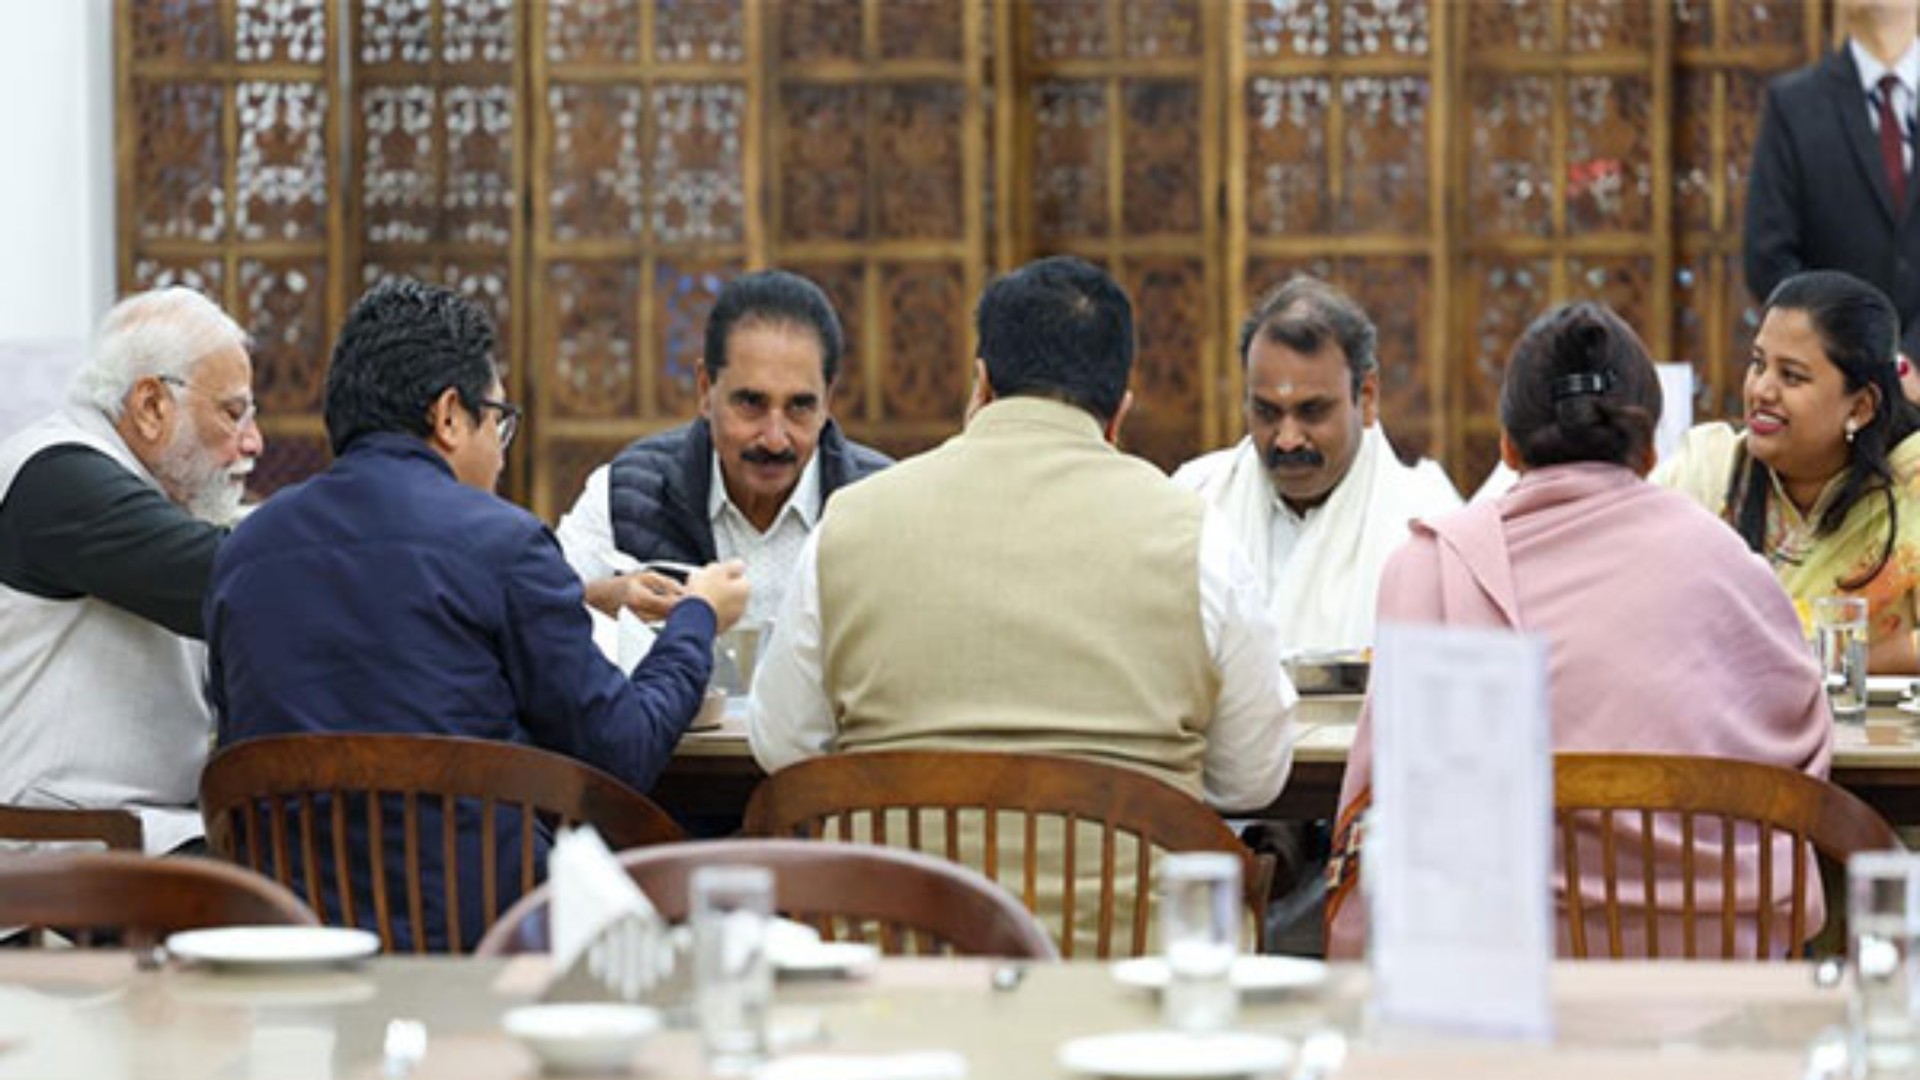 CPI(M) slams UDF leader Premachandran for having lunch with PM Modi; Congress says 